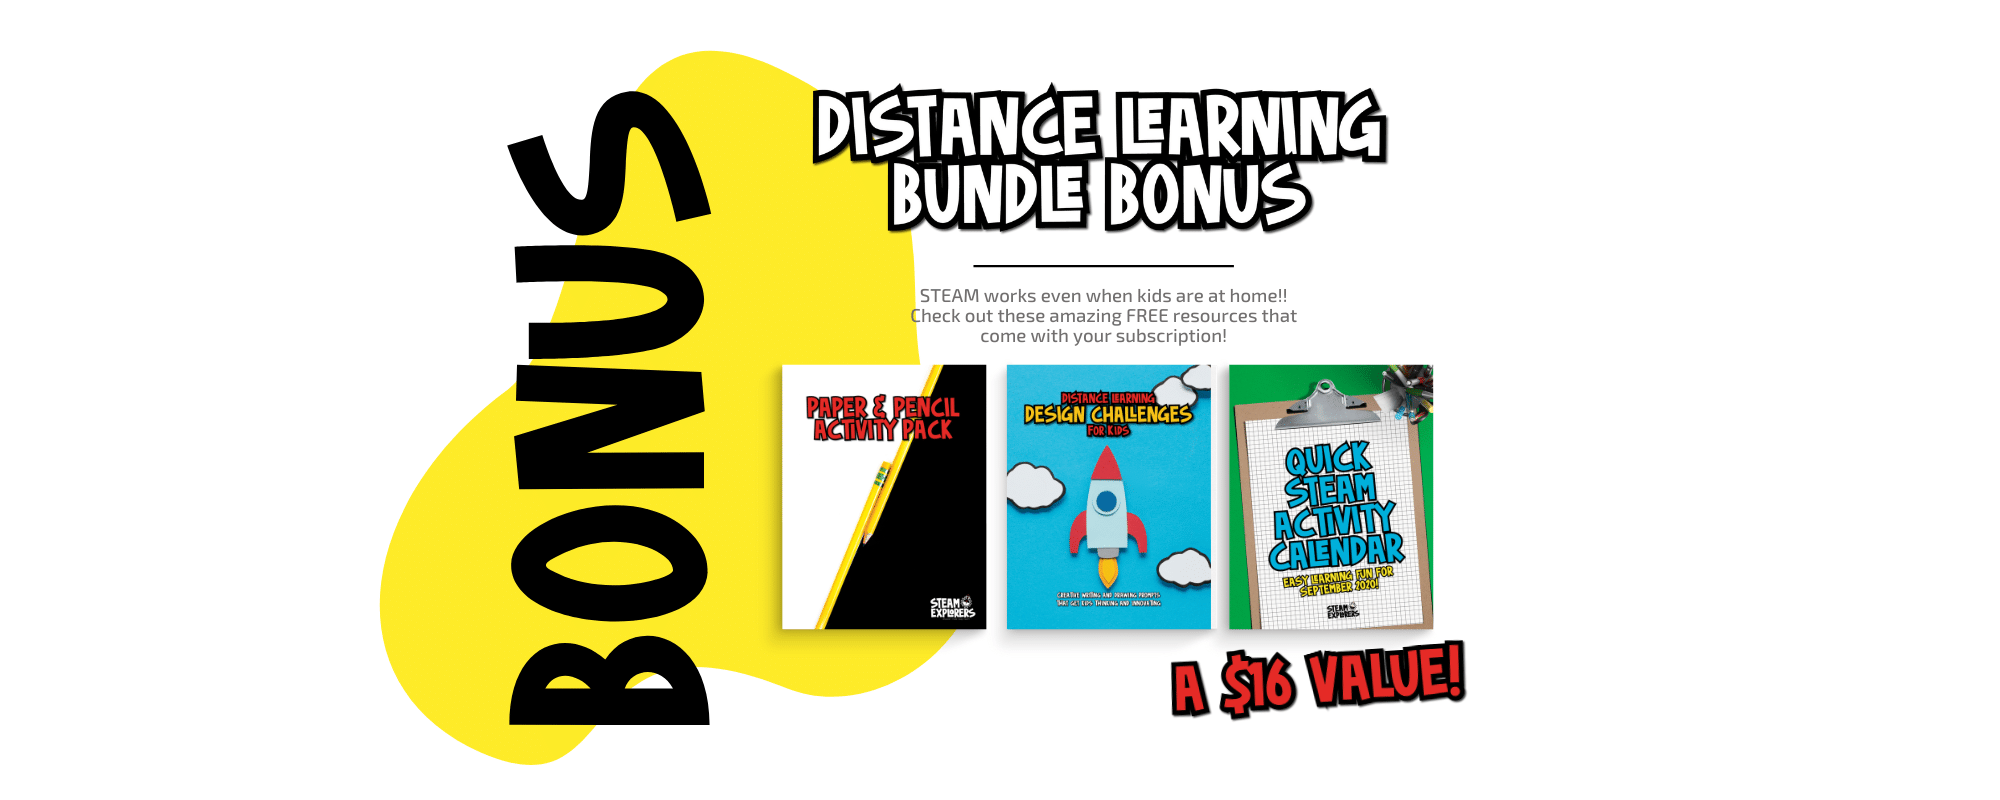 bonus distance learning v3